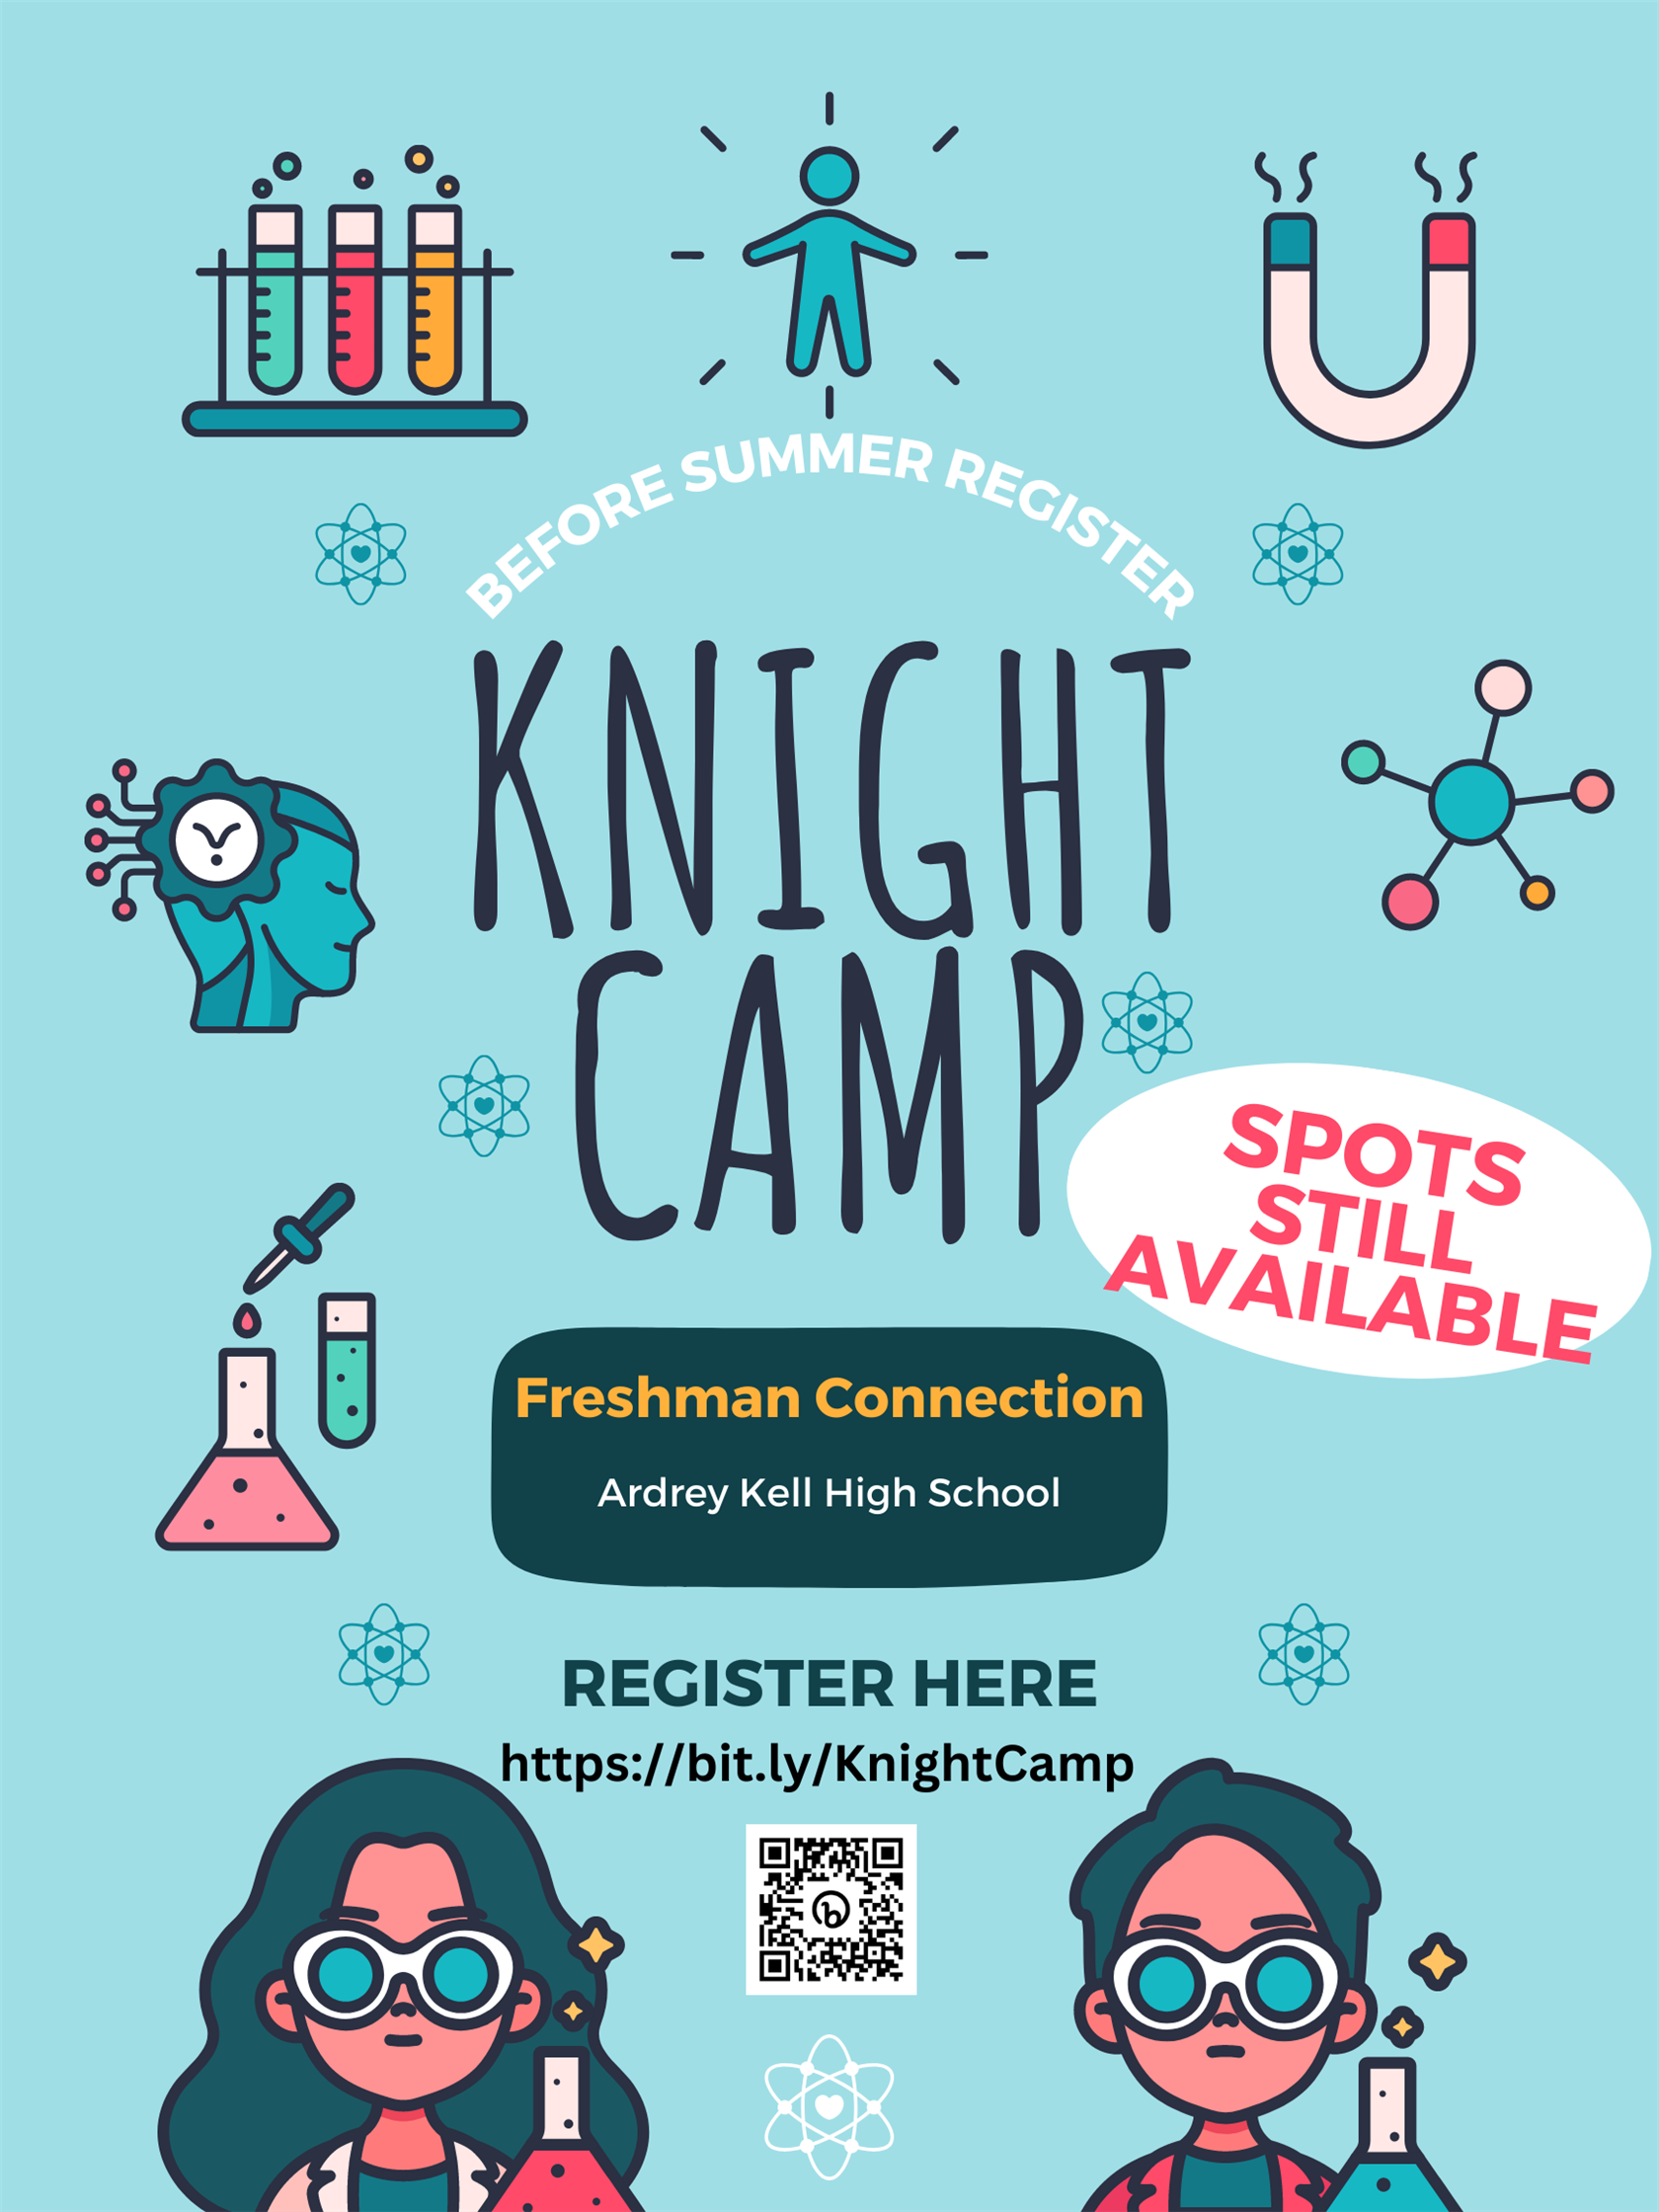  Knight Camp Information